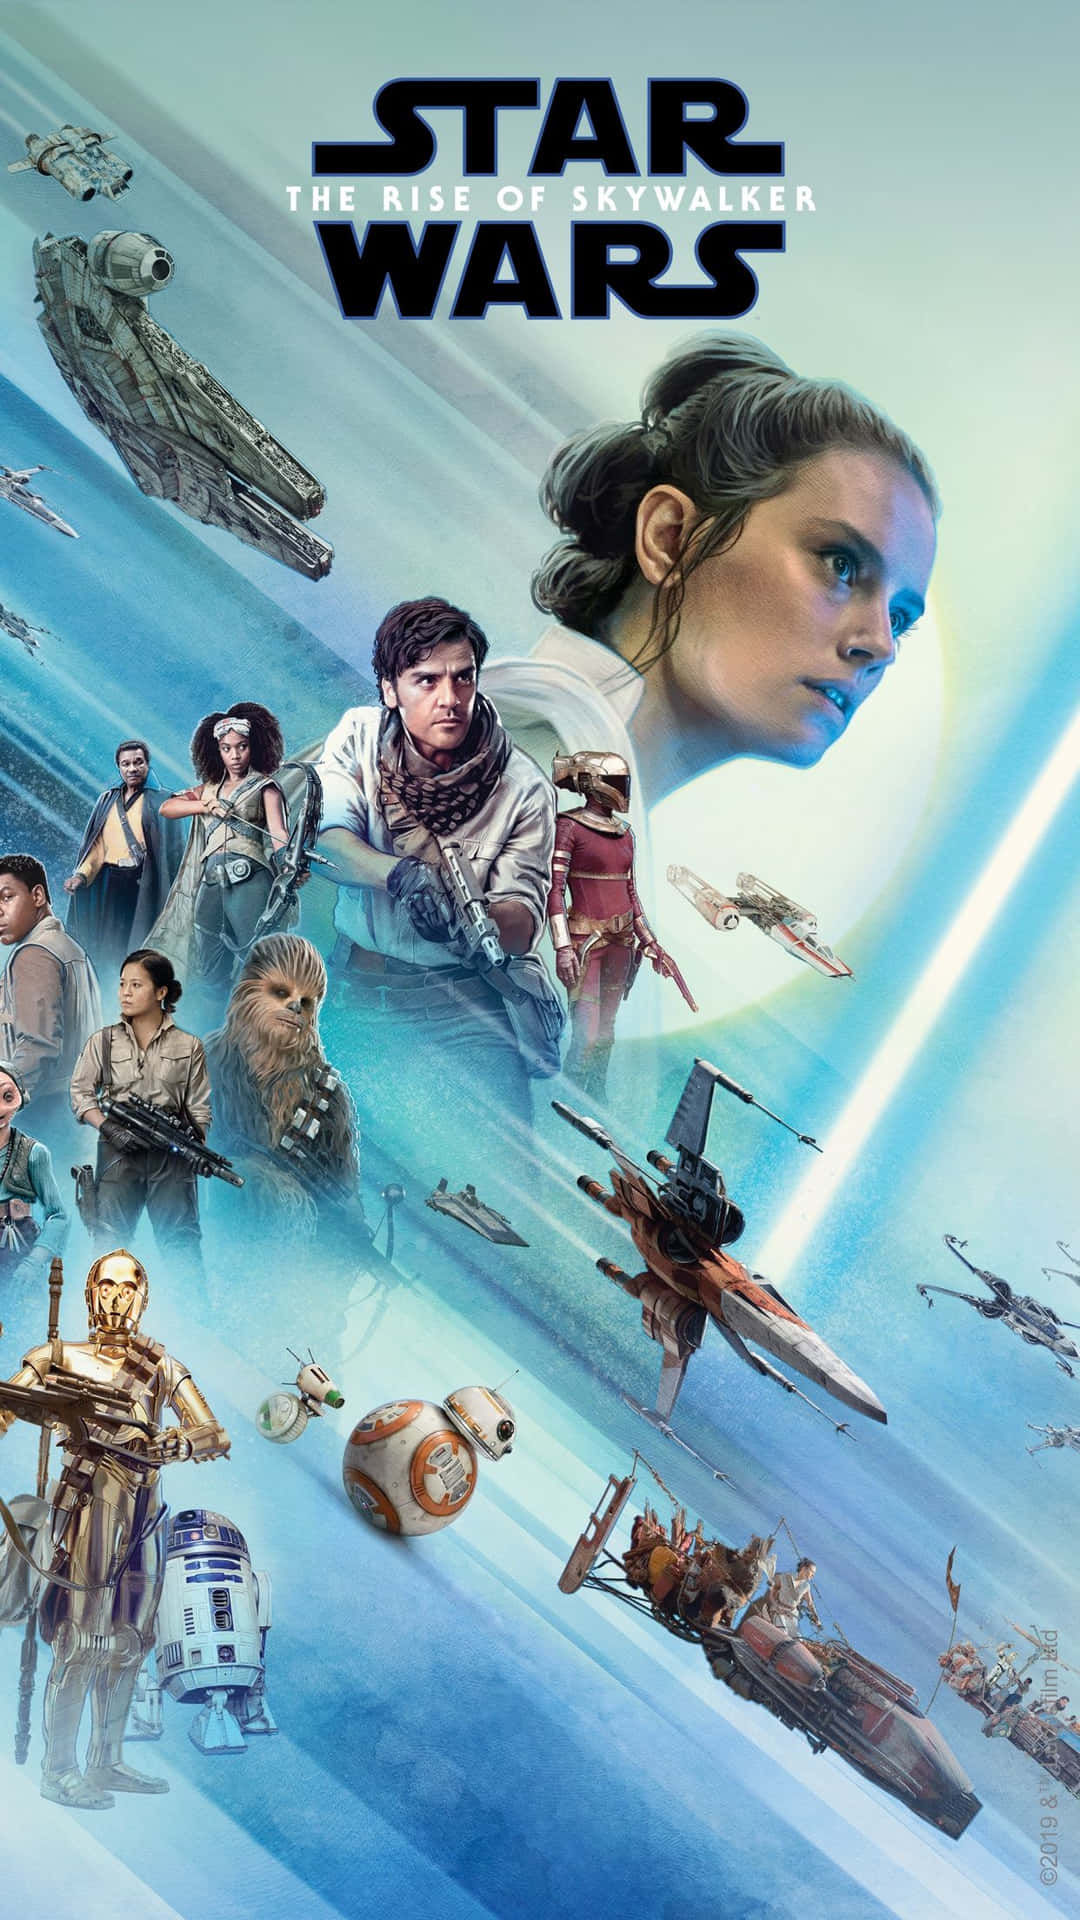 Fejrer de ikoniske Star Wars-karakterer Wallpaper